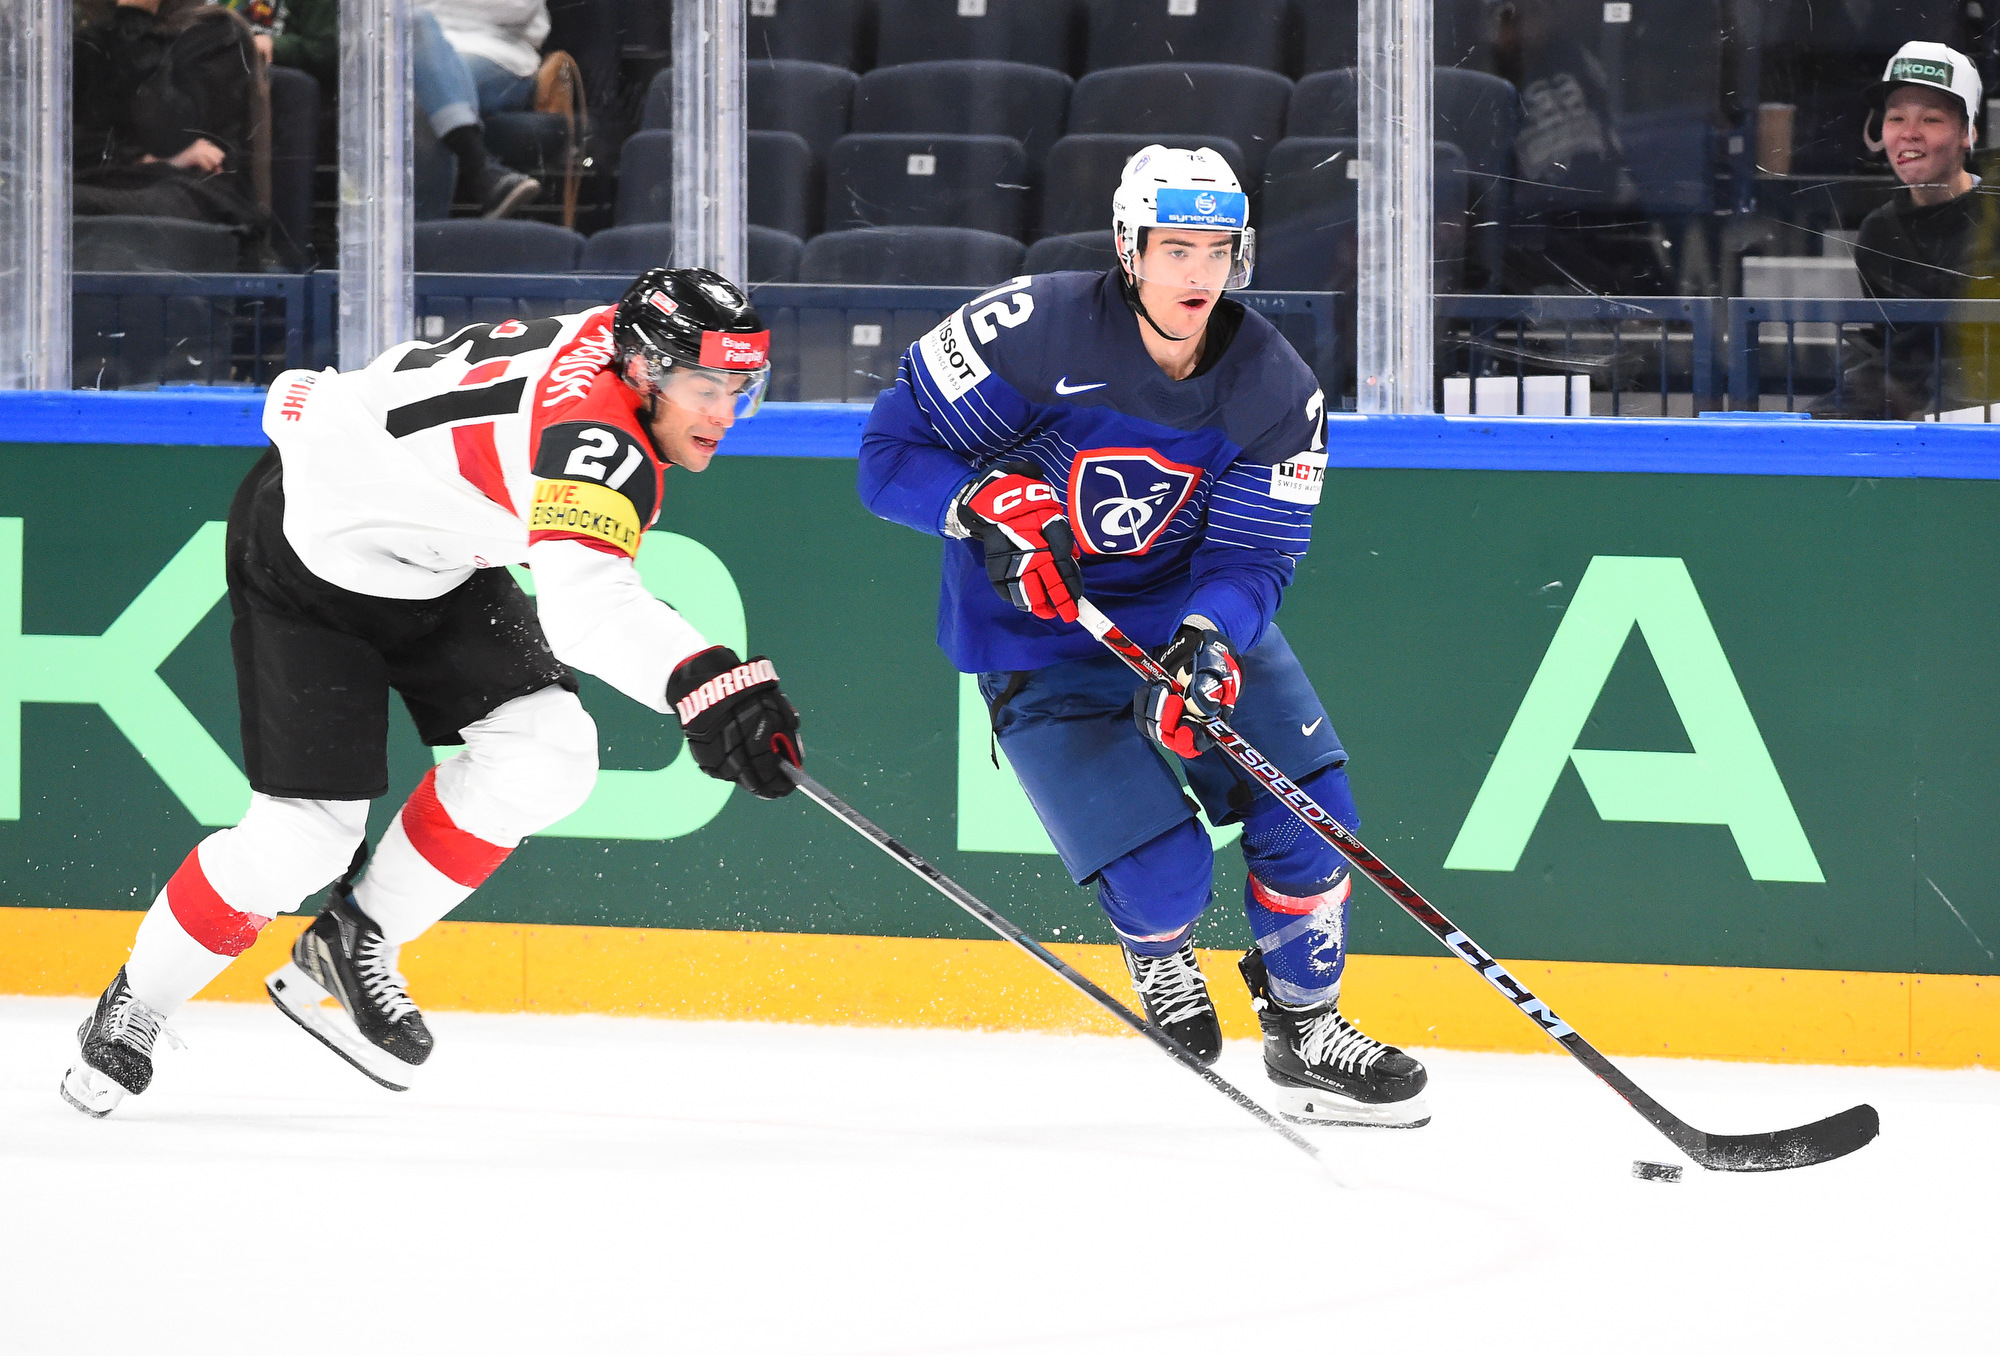 IIHF - Gallery France vs Austria